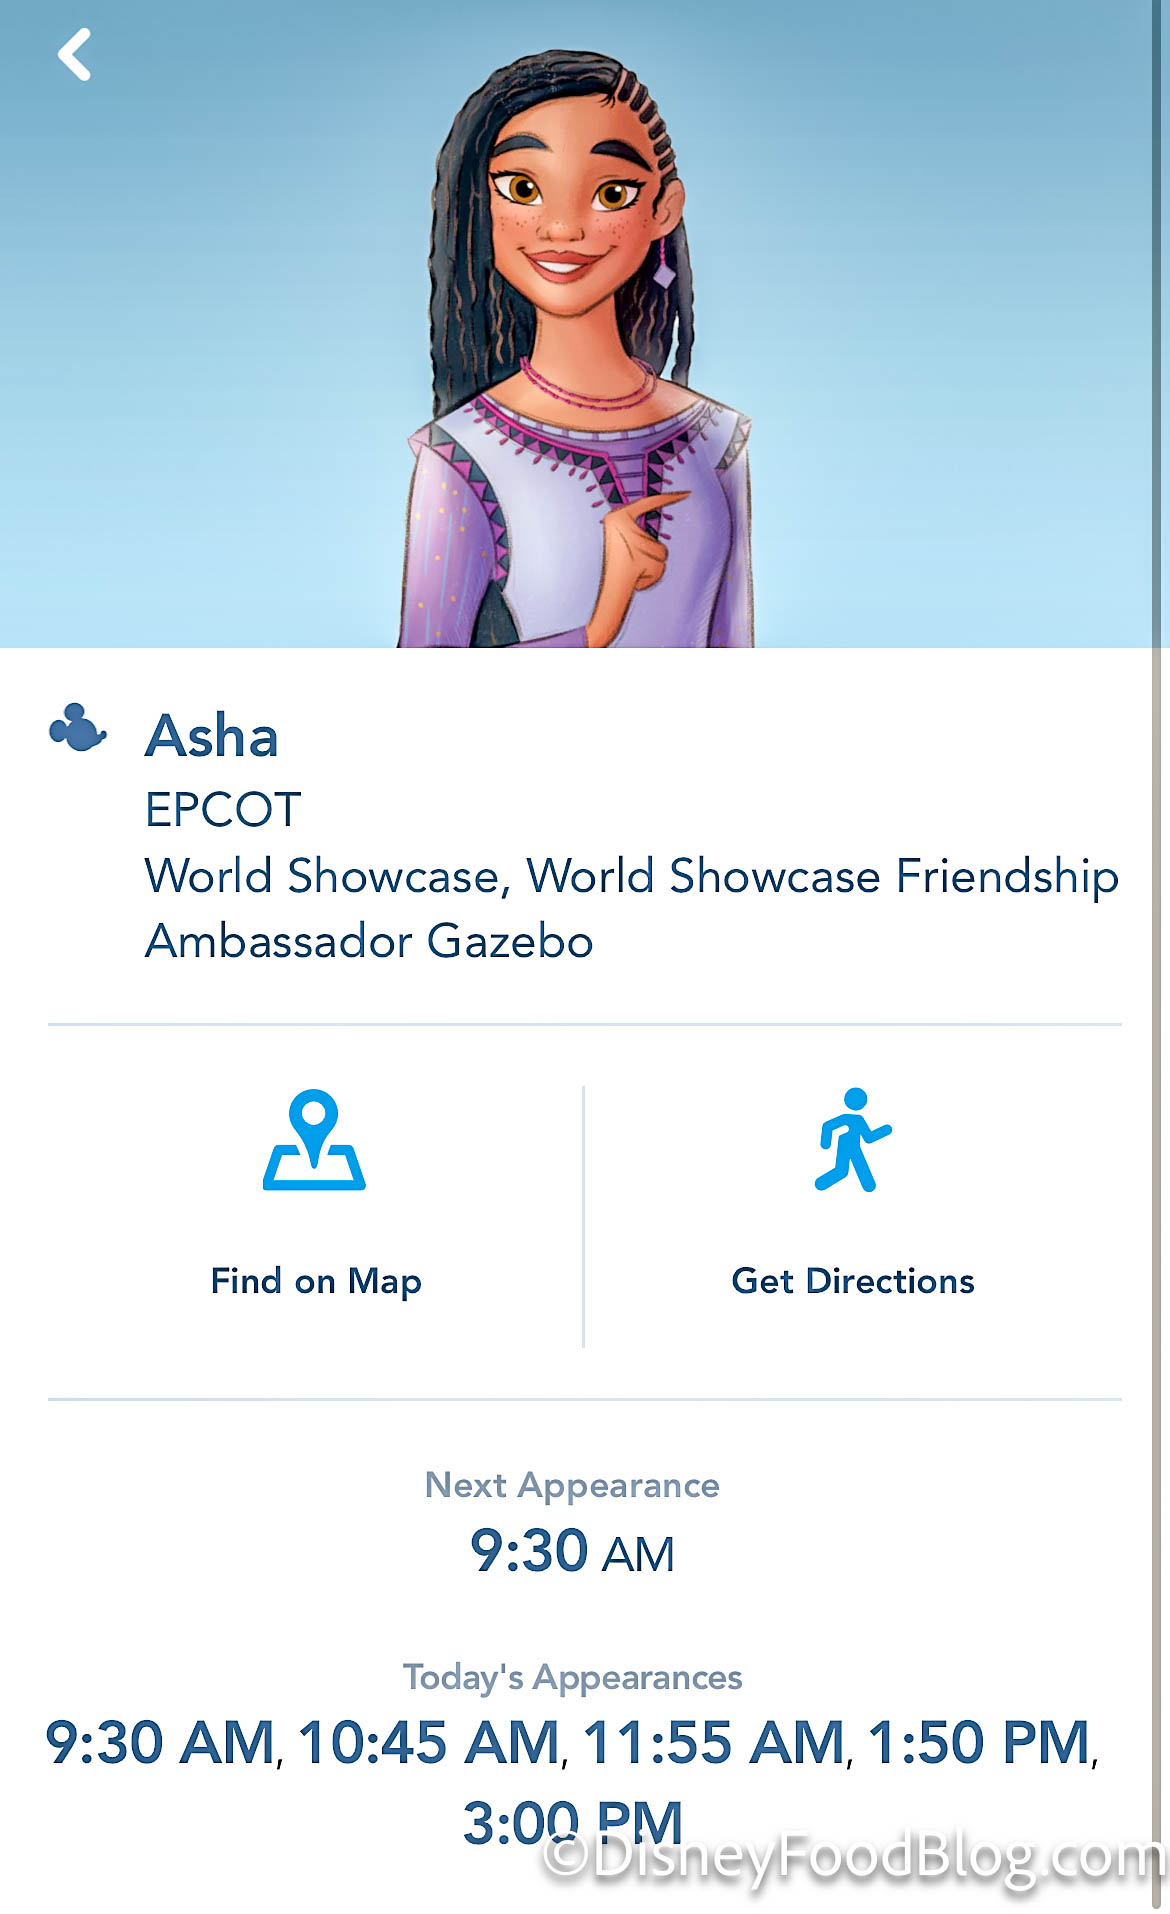 Where to meet Asha from 'Wish' at Disney World and Disneyland